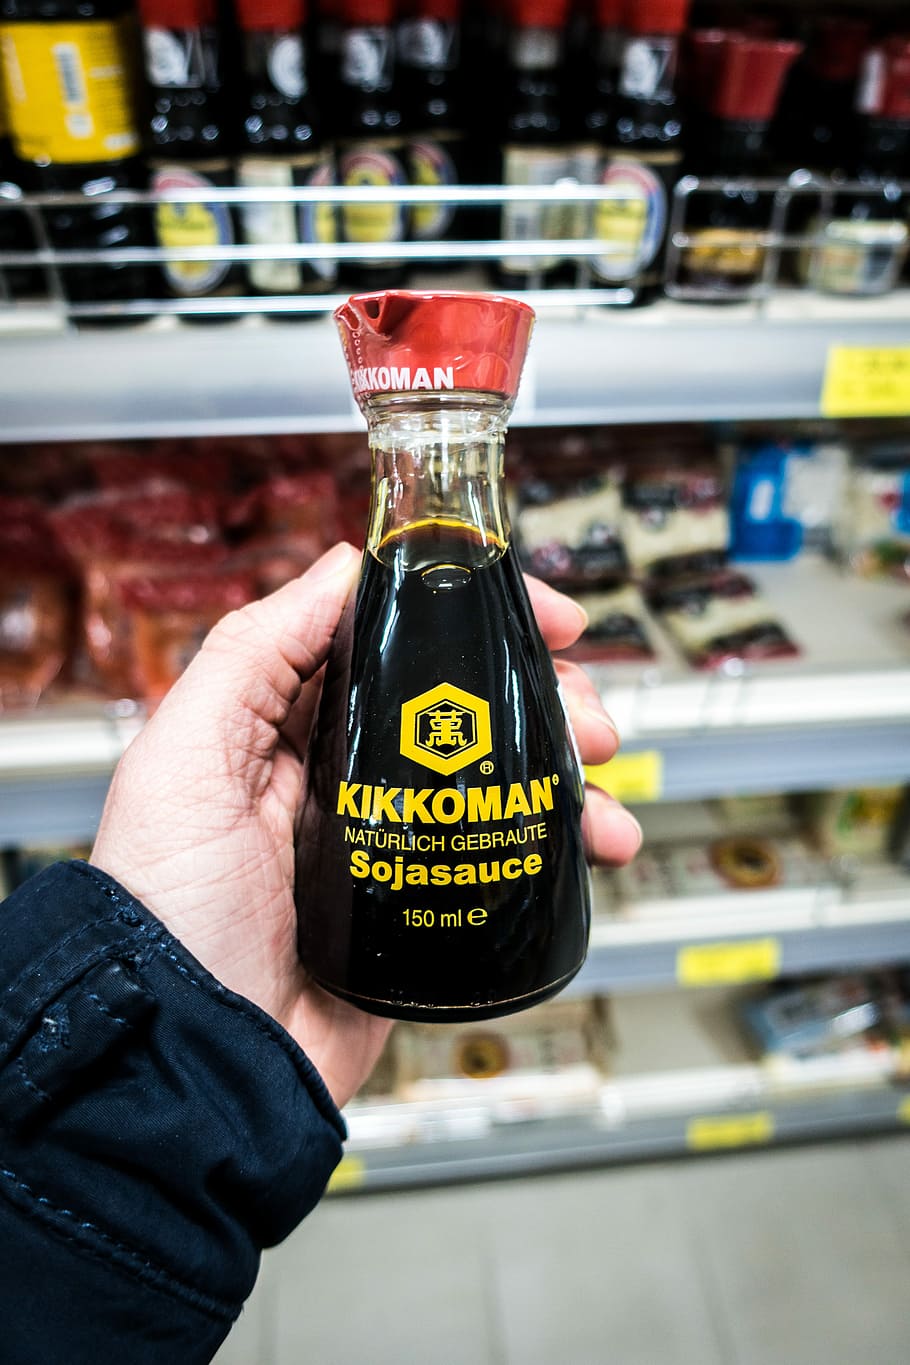 kikkoman soy sauce, Kikkoman, soy sauce, retail, store, editorial, bottle, consumerism, brand-name, human hand